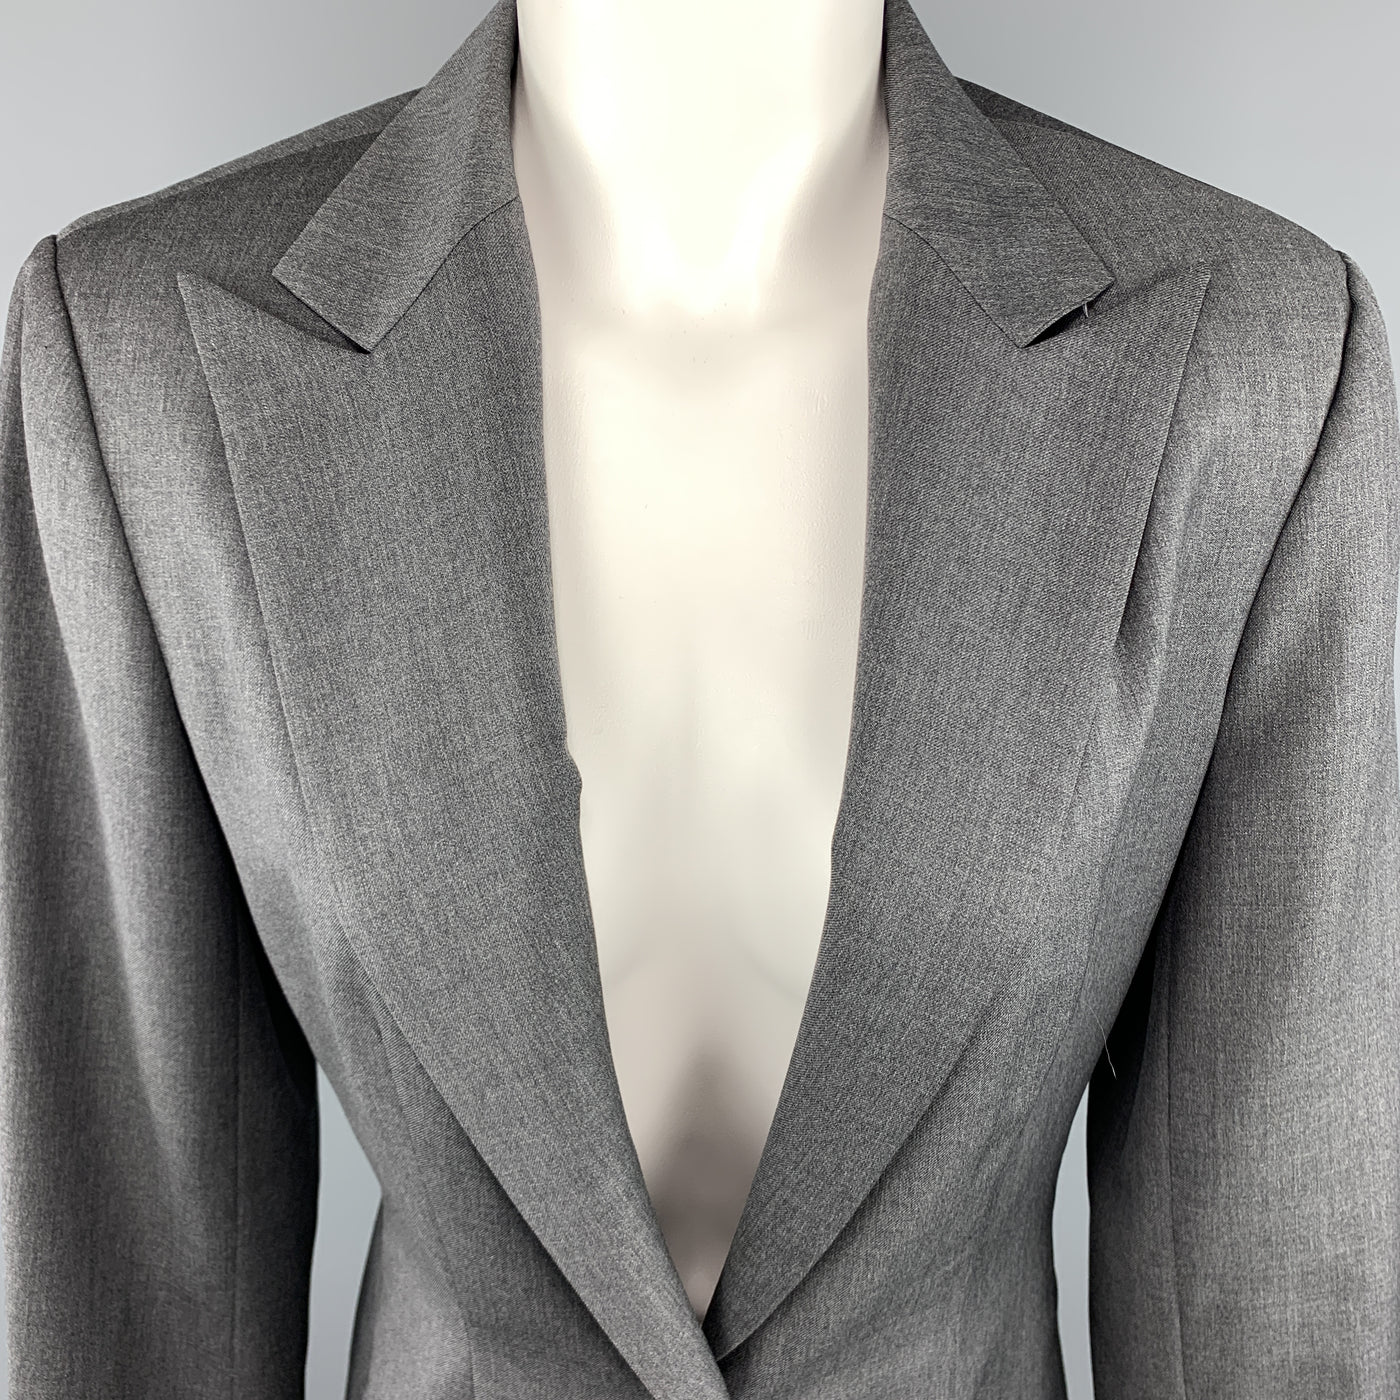 RICHARD TYLER Size 8 Grey Jacket / Blazer